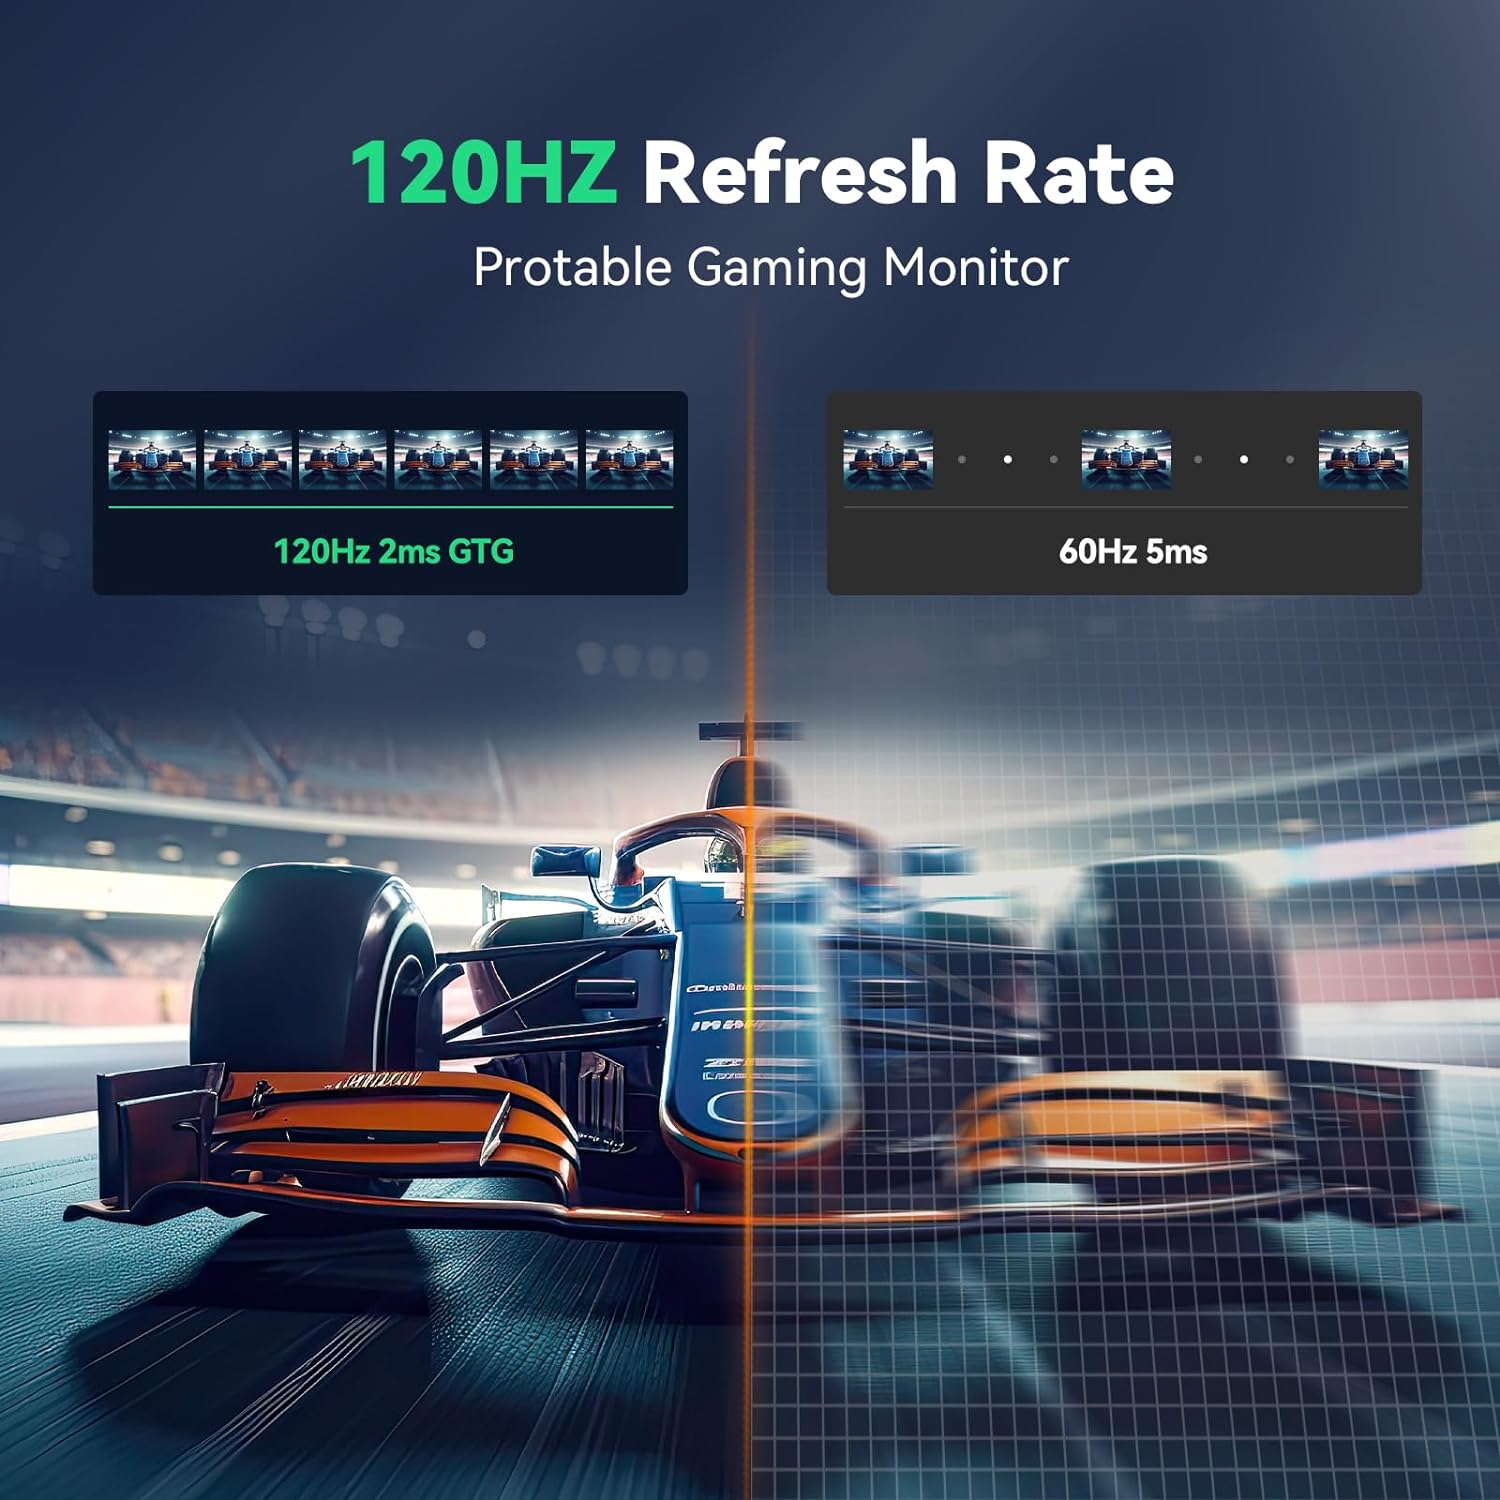 SVANTTO 16” 2K Portable Gaming Monitor, 120Hz 2ms Professional Esports Portable Monitor - $145